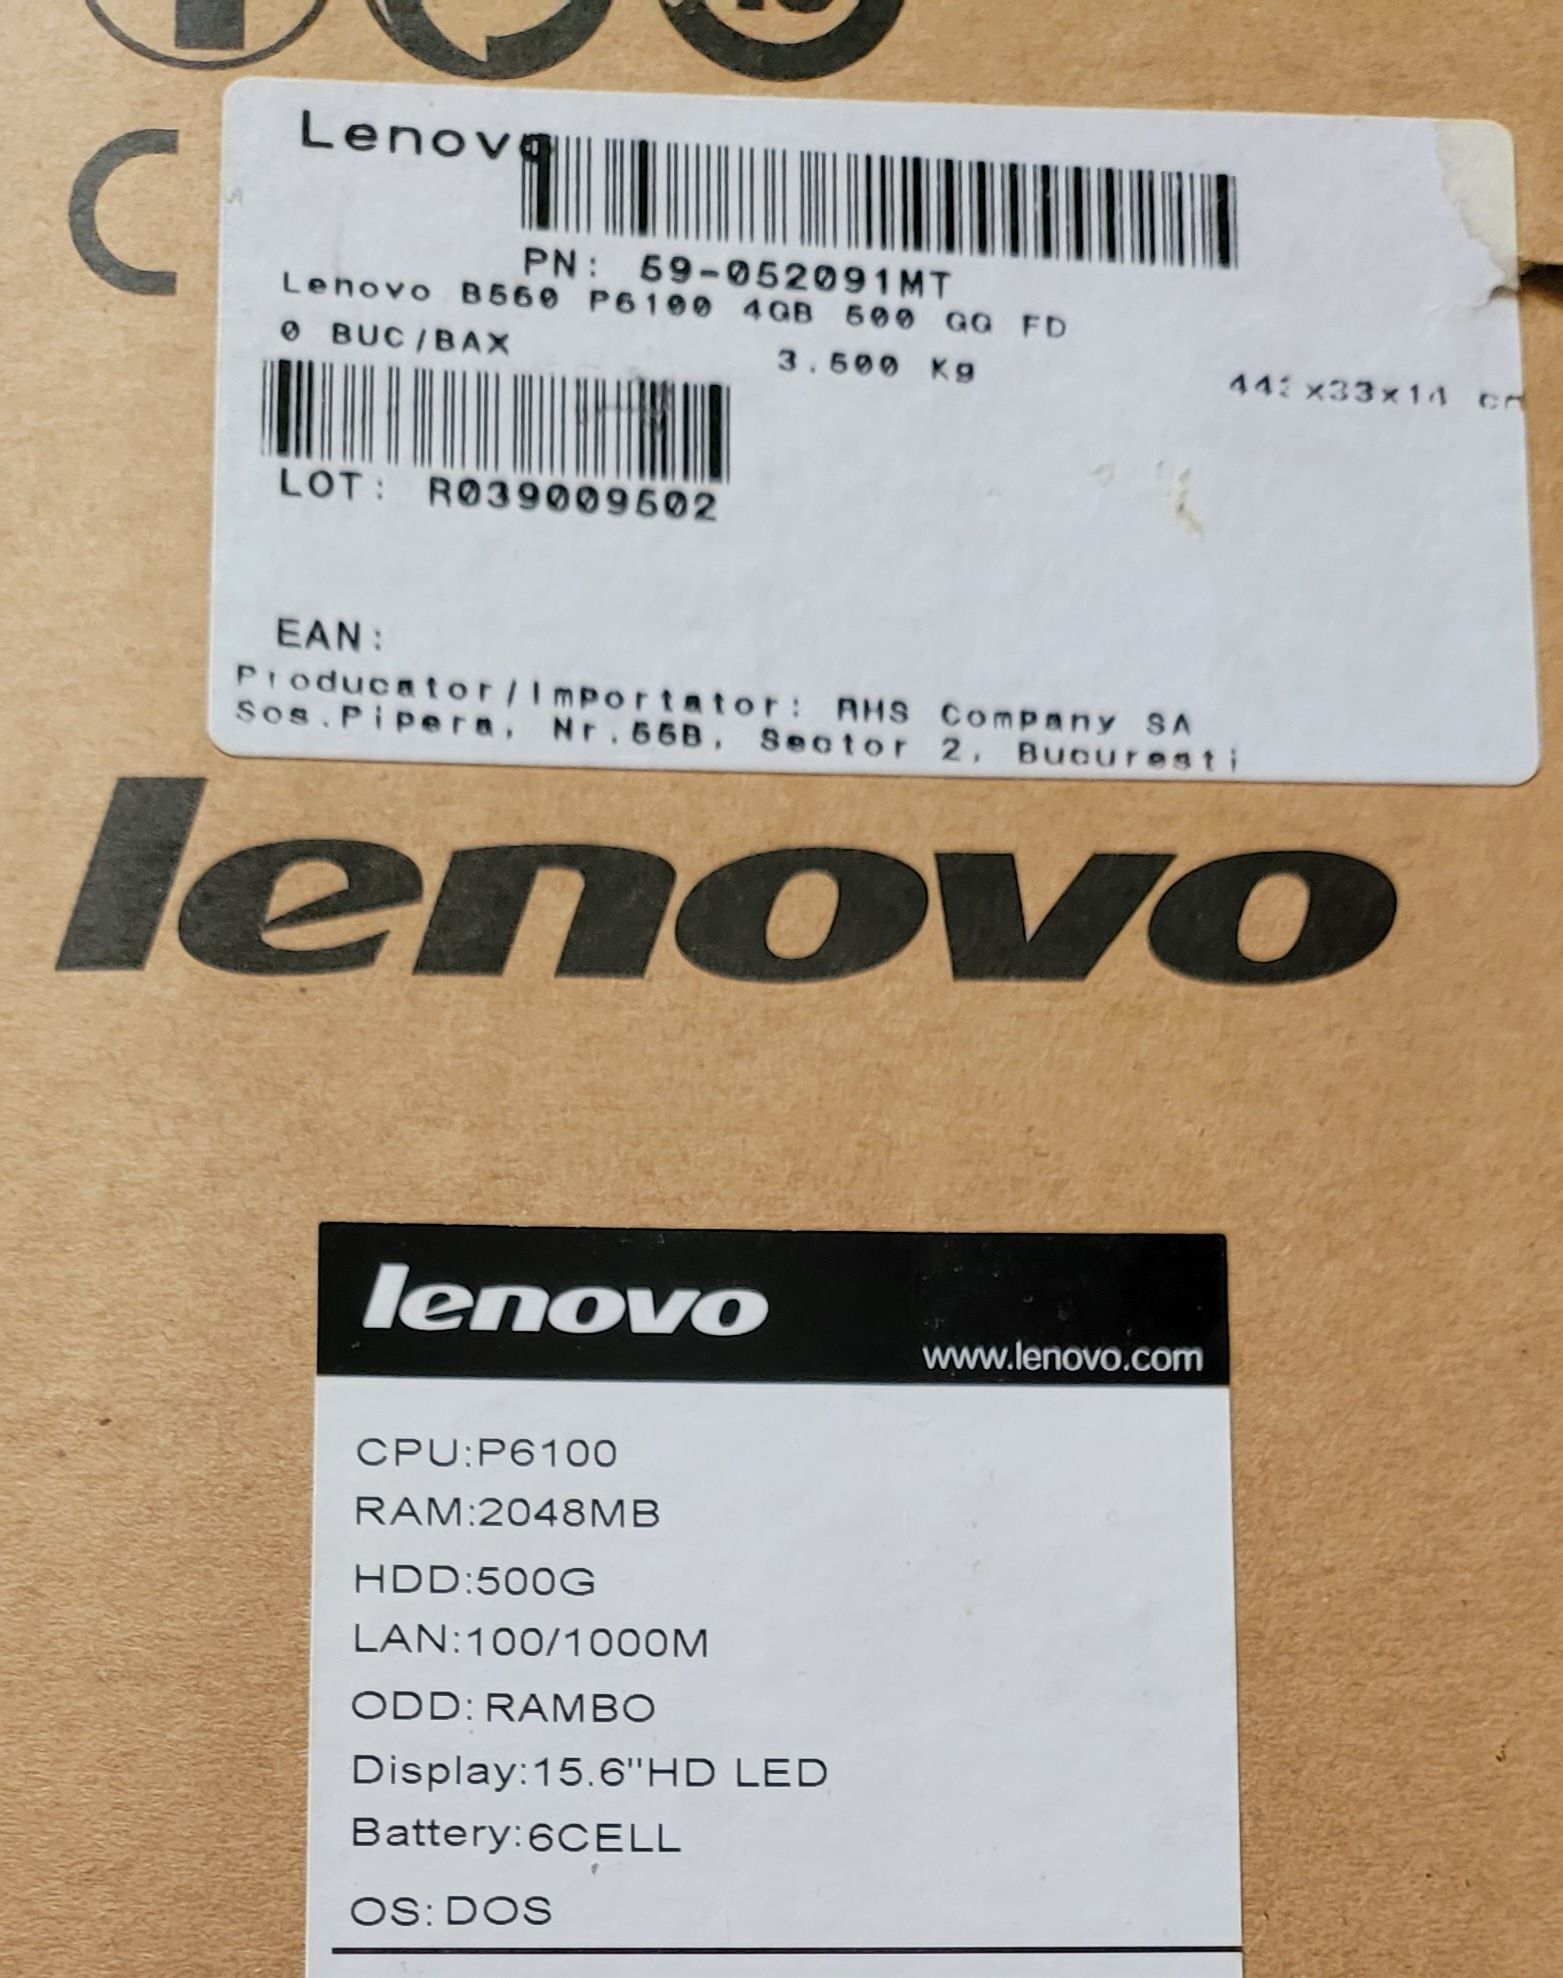 Laptop Lenovo B560, CPU P6100, 4GB RAM, 250GB HDD